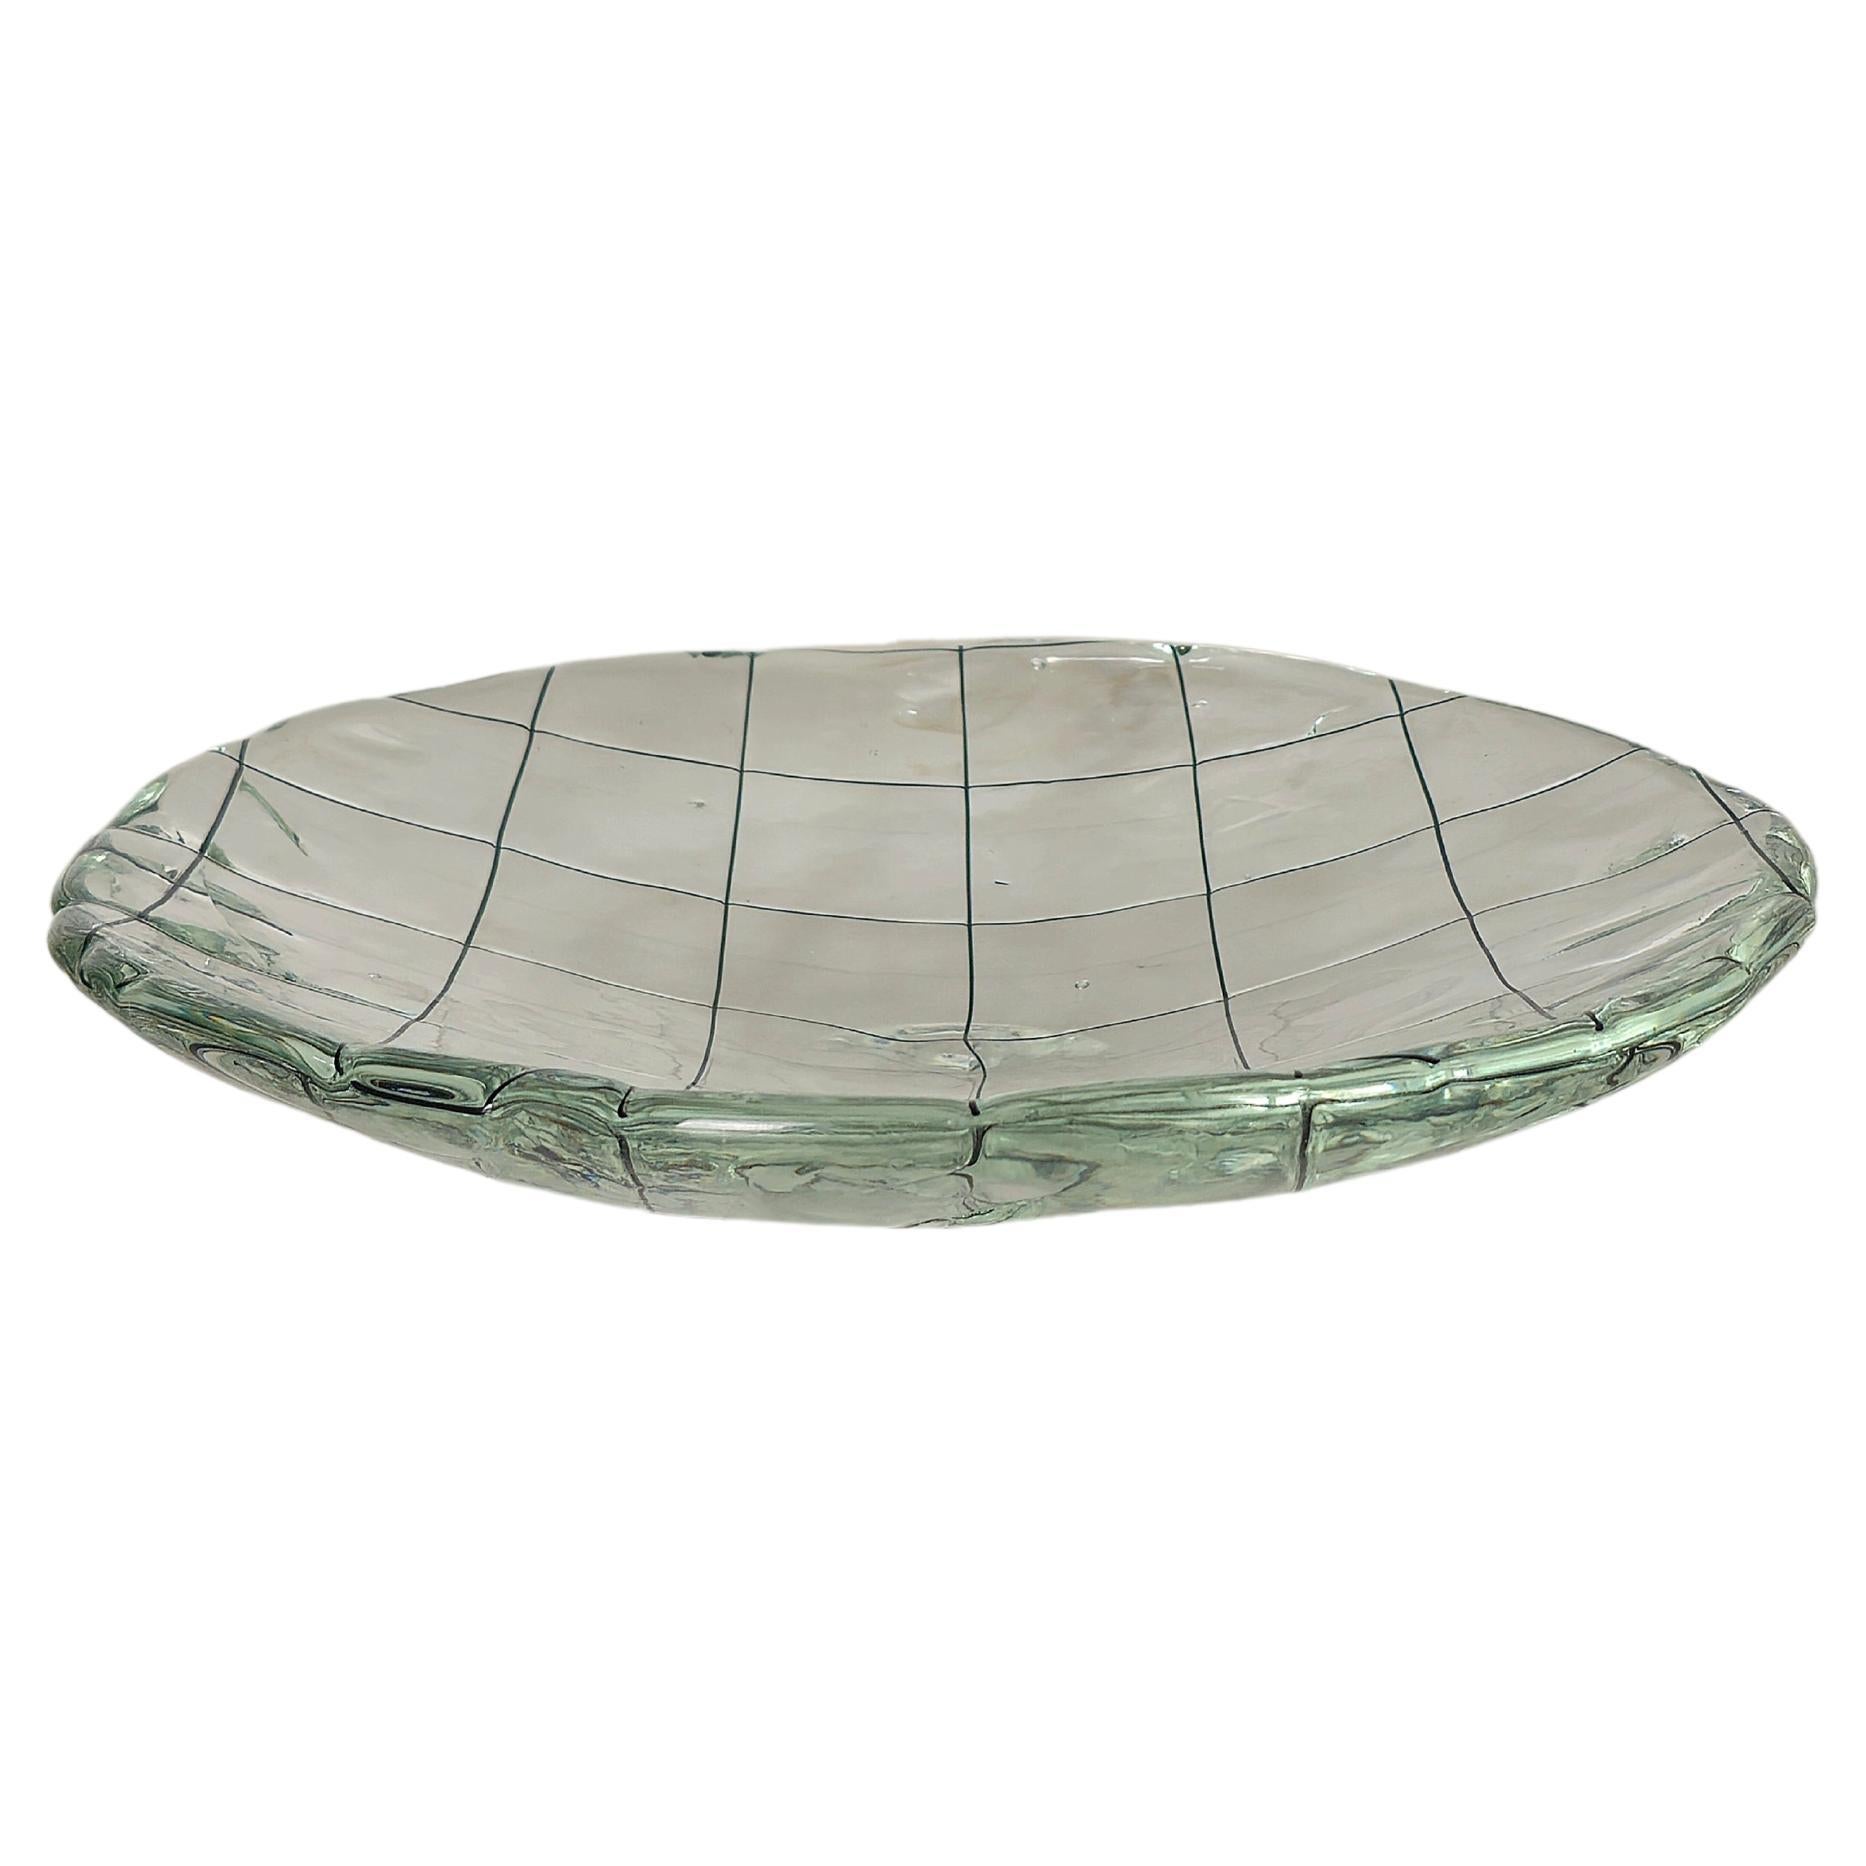 Decorative Dish Murano Glass Circular Midcentury Modern Italian Design 1950s For Sale